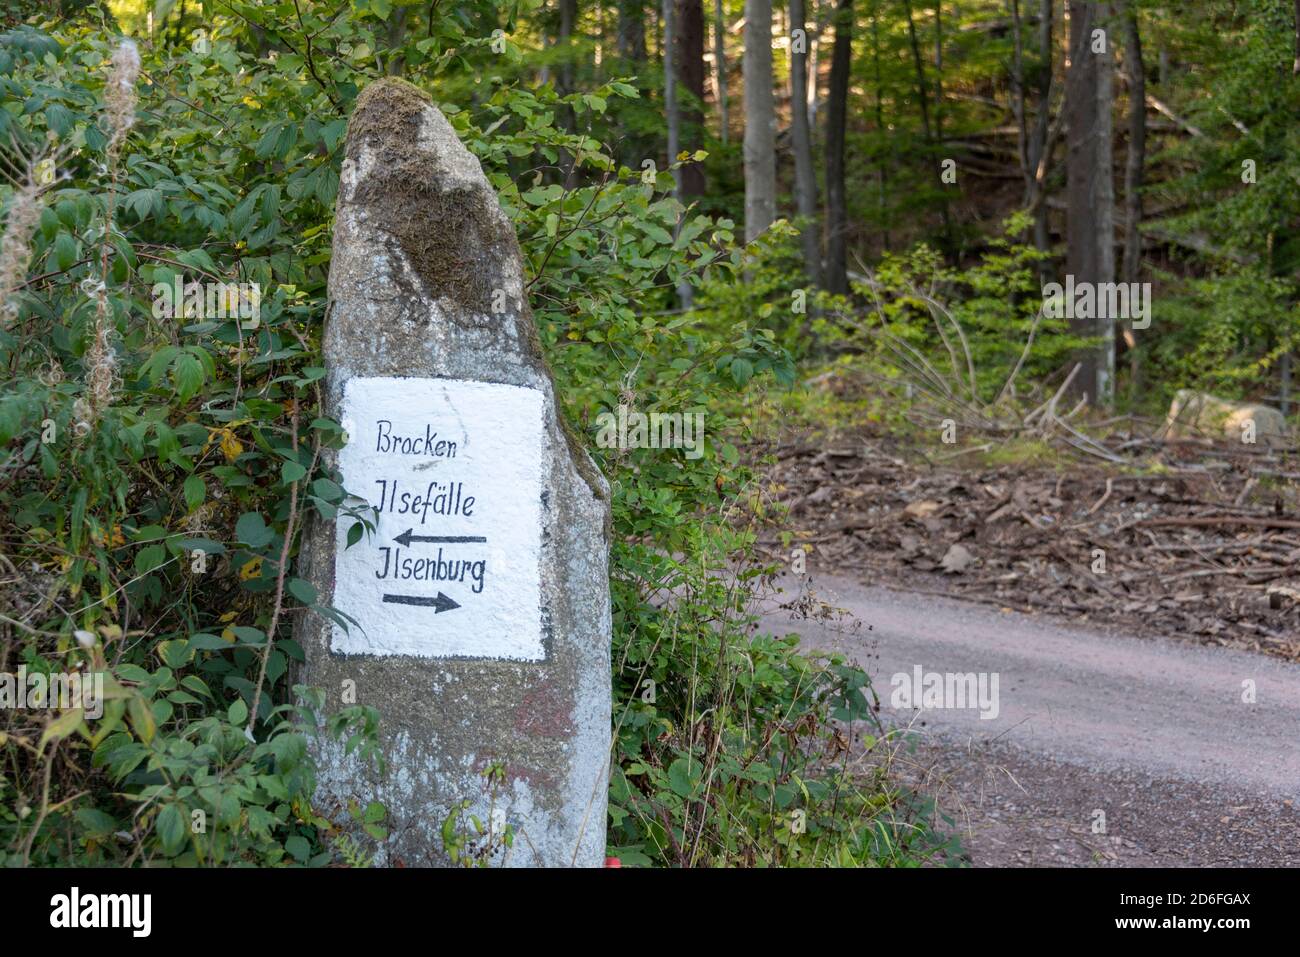 Germany, Saxony-Anhalt, Ilsenburg, signpost to the Brocken and the Ilse Falls, Harz National Park Stock Photo